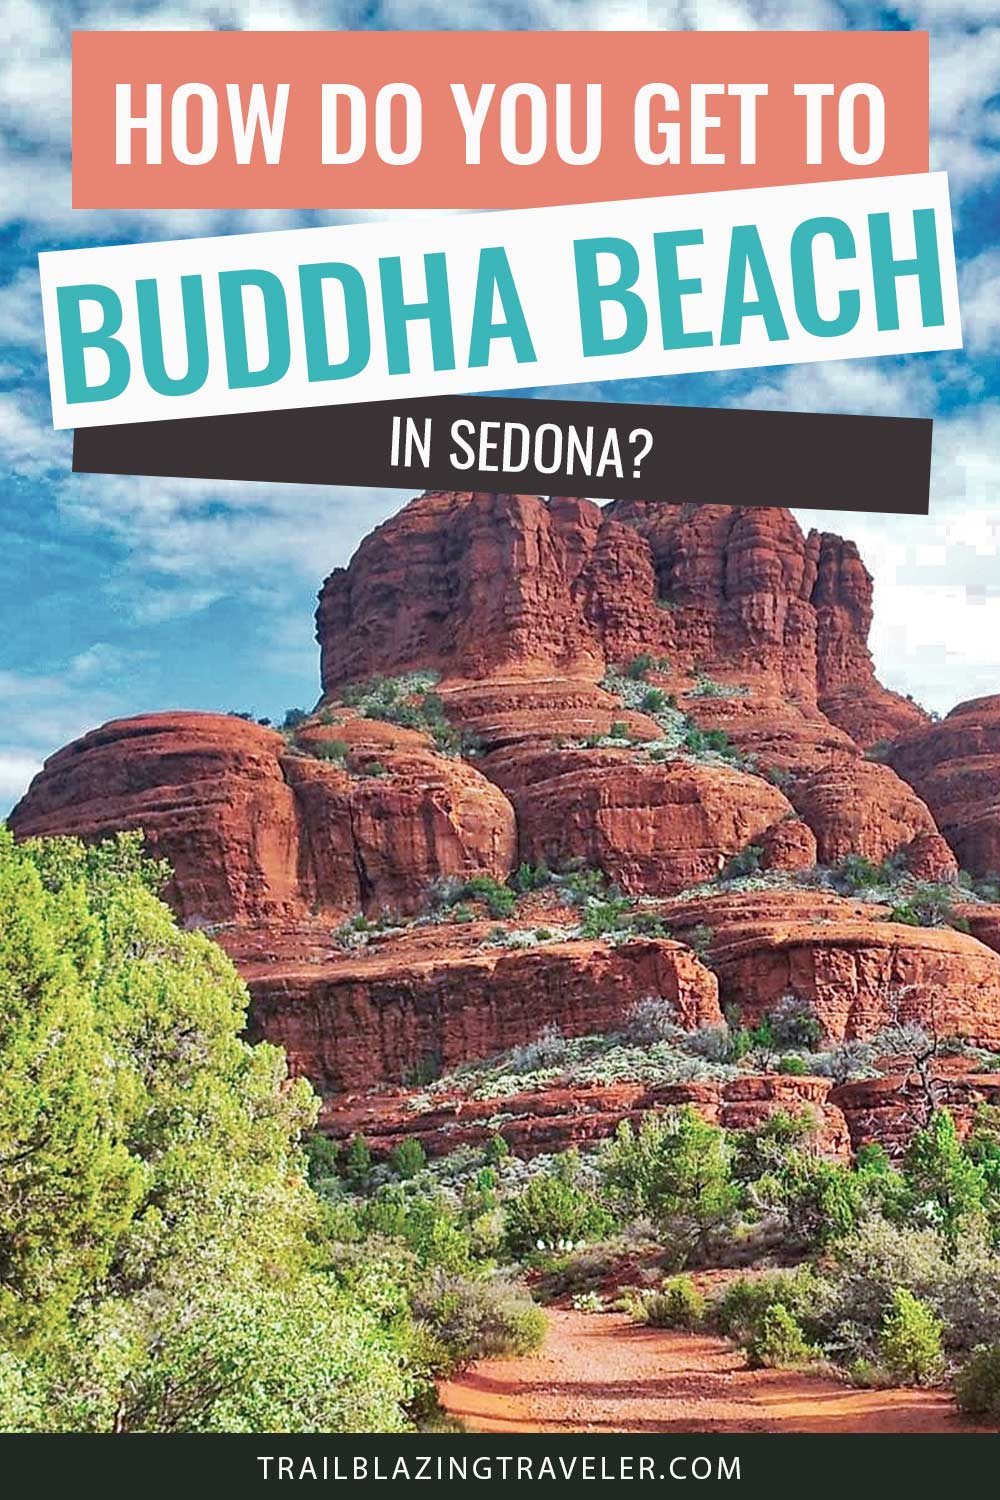 How Do You Get To Buddha Beach In Sedona?